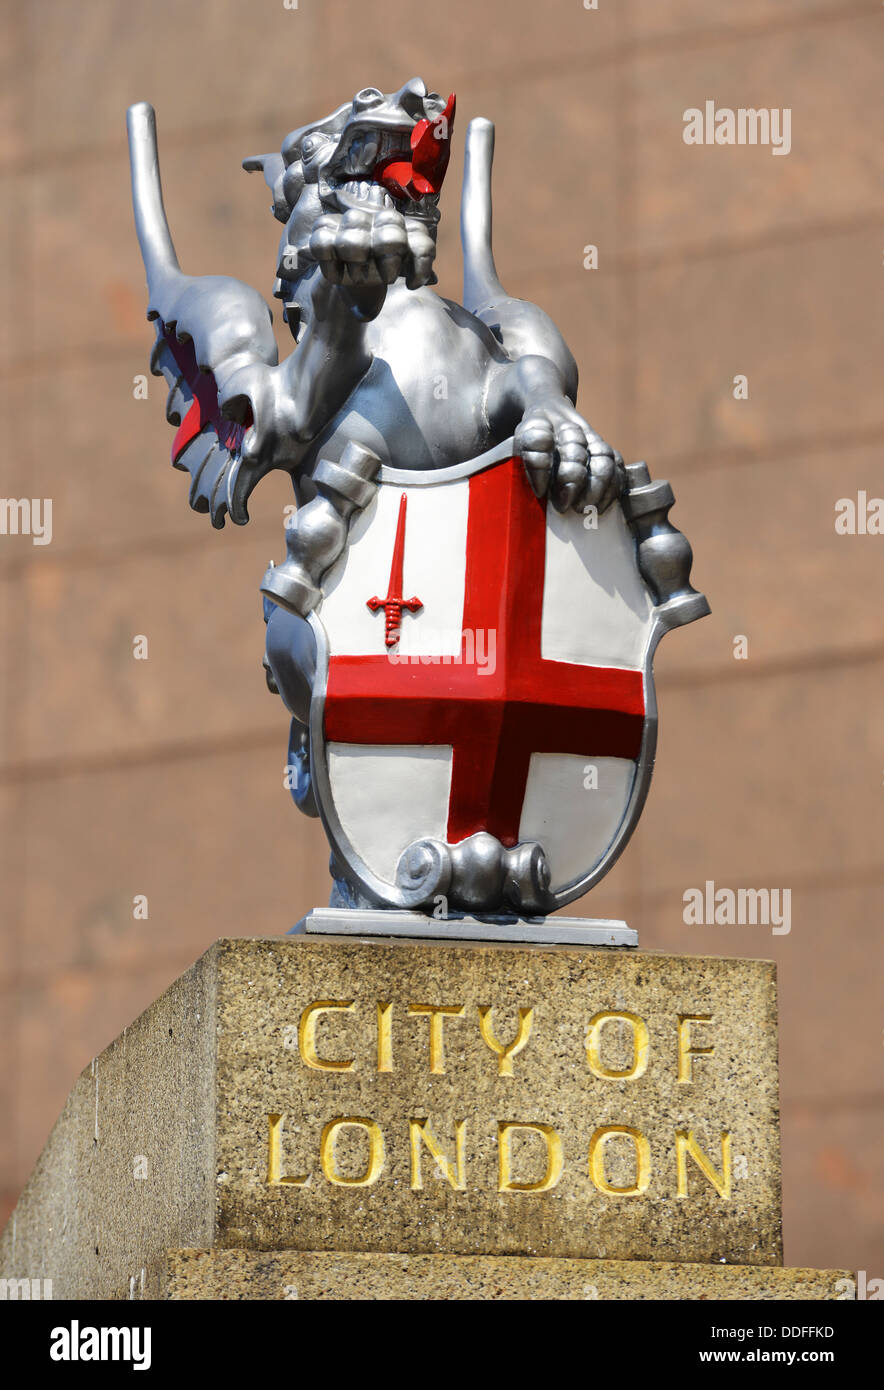 City of London statue. Dragon boundary mark statue marking boundary of the City of London, England, UK Stock Photo